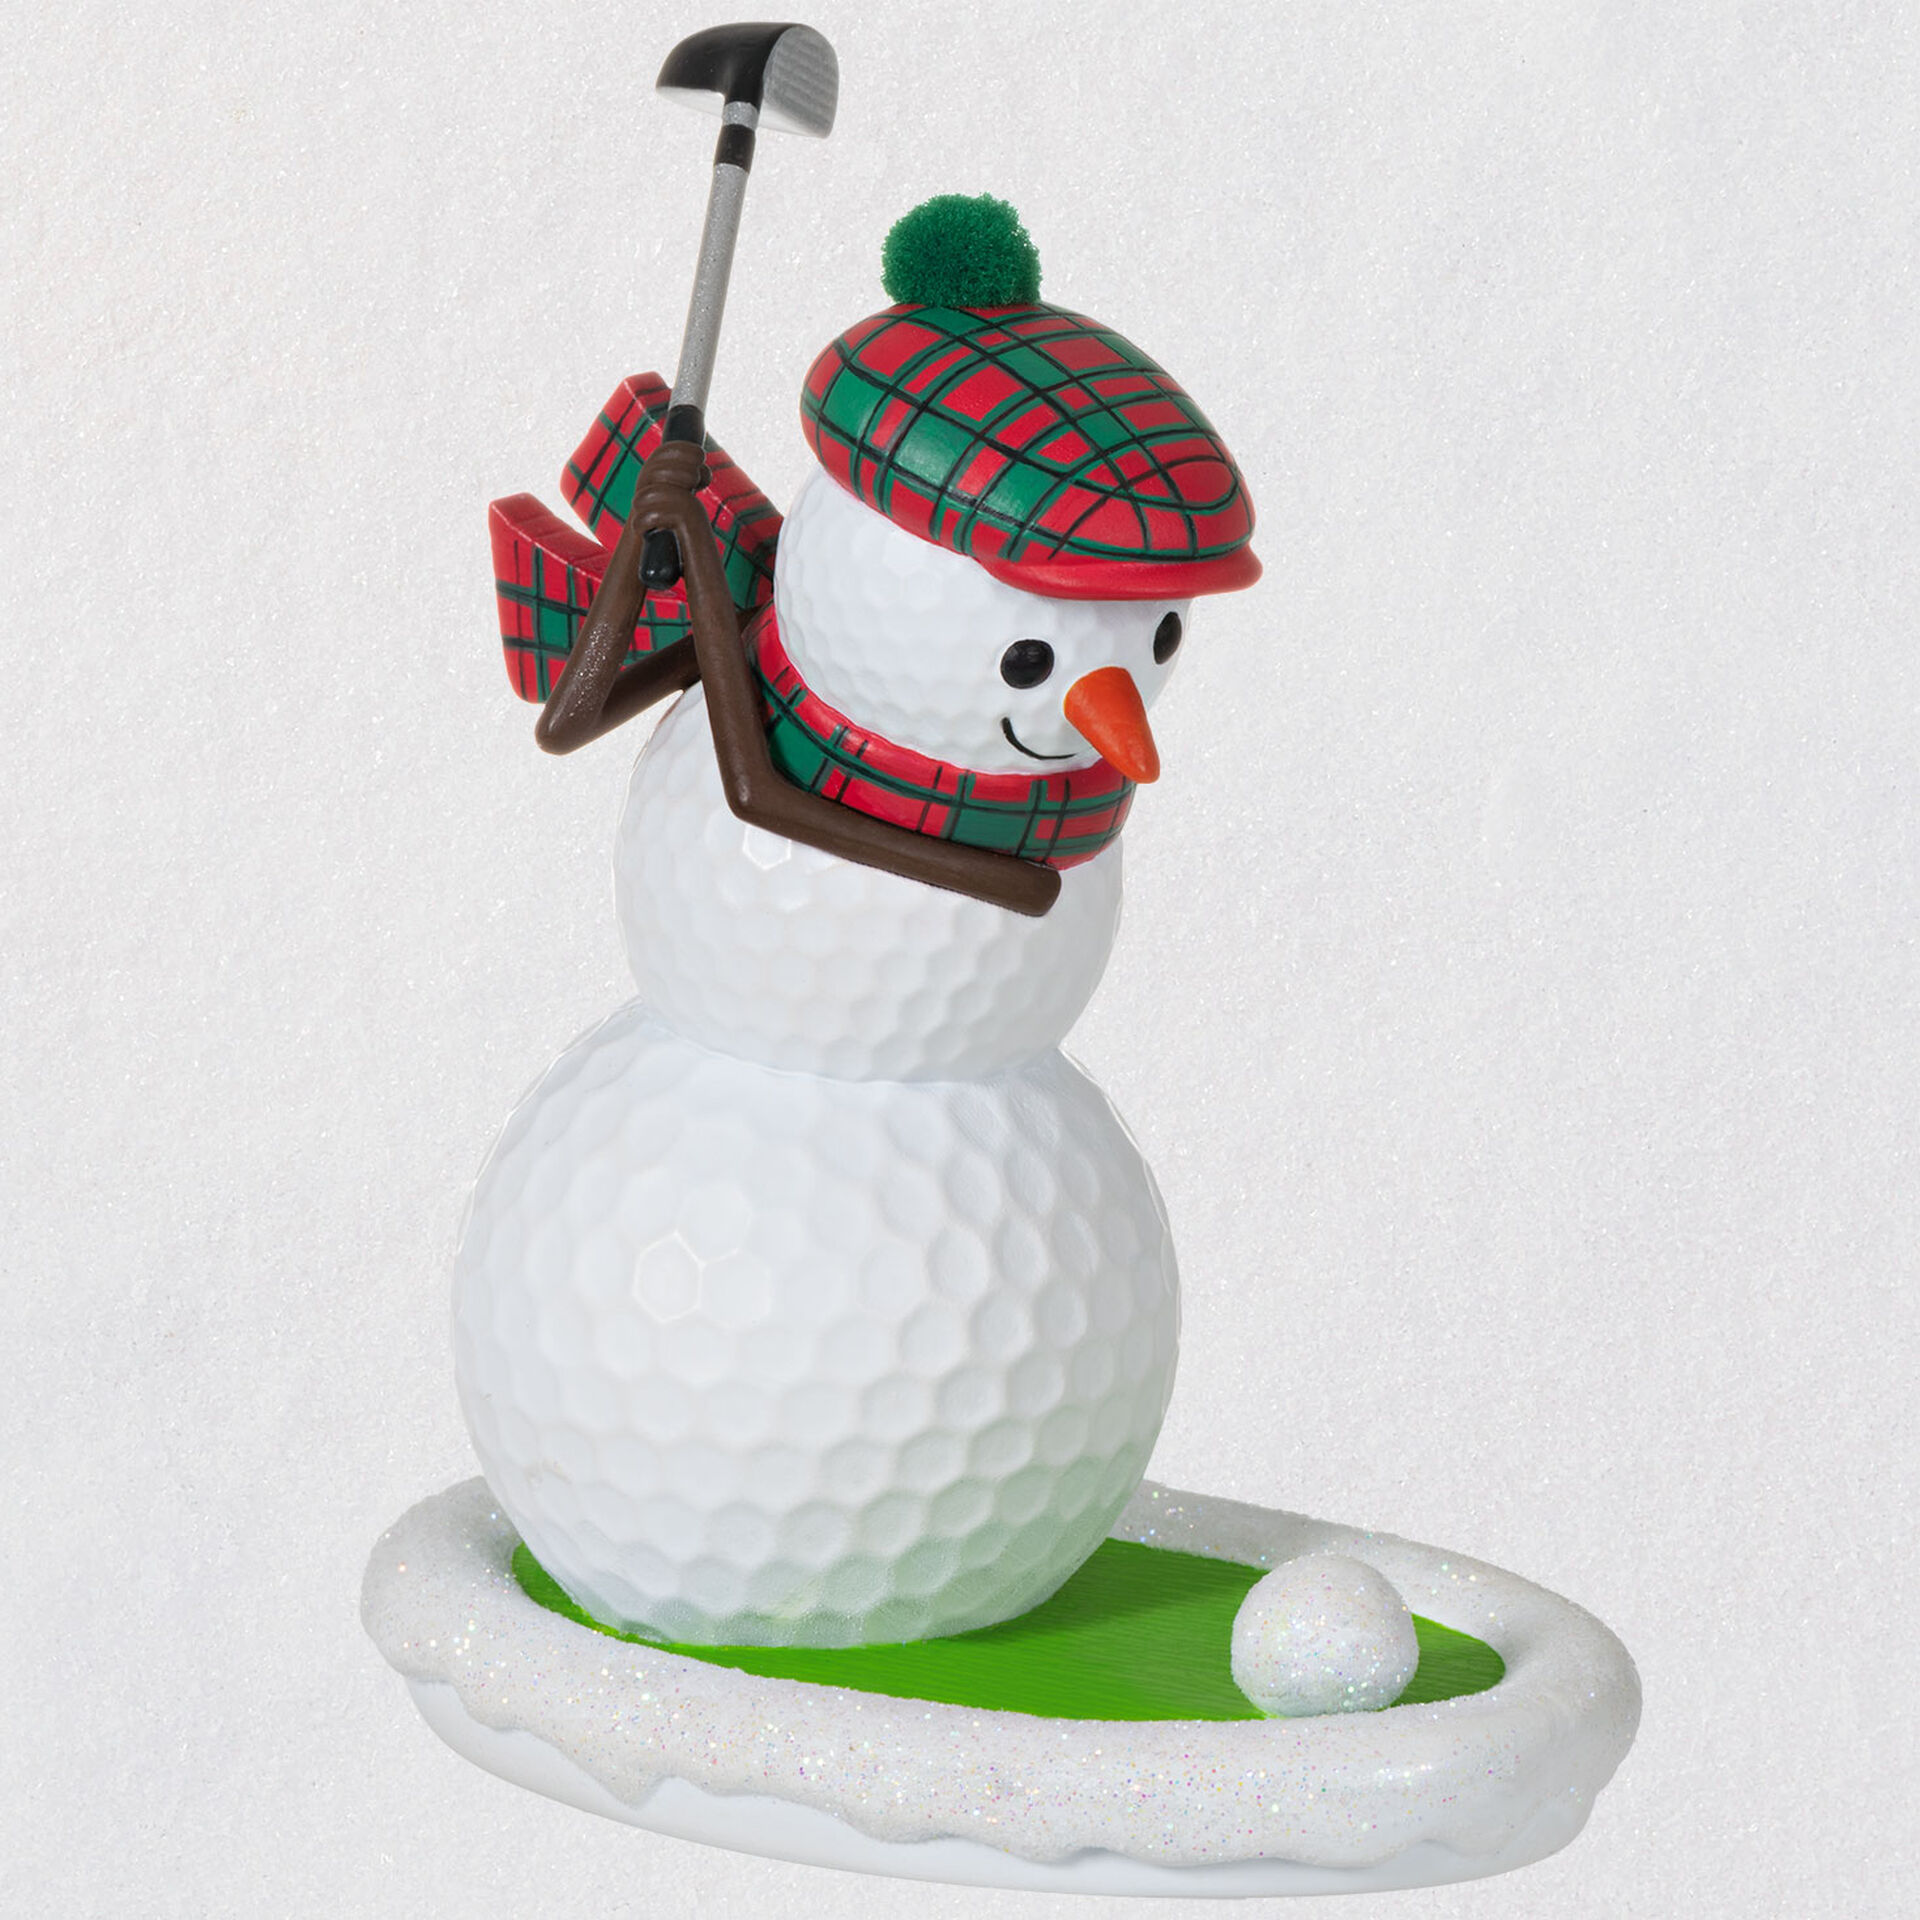 Golfing In The Snow Golf Ball Snowman Ornament Keepsake Ornaments Hallmark 